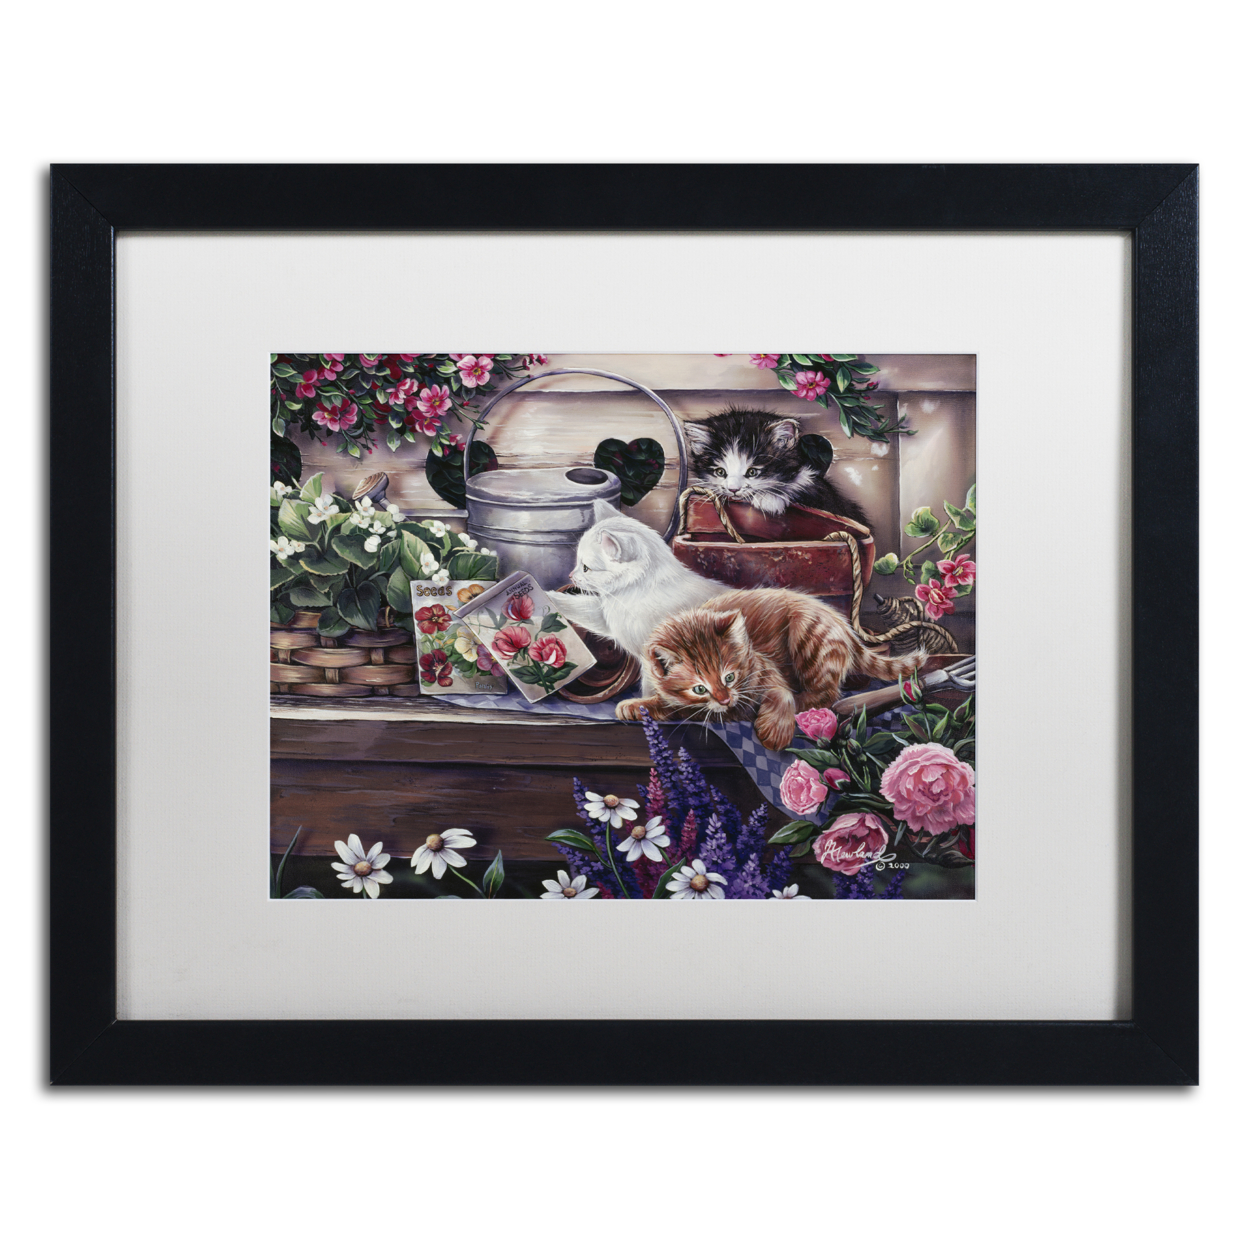 Jenny Newland 'Playful Kittens' Black Wooden Framed Art 18 X 22 Inches